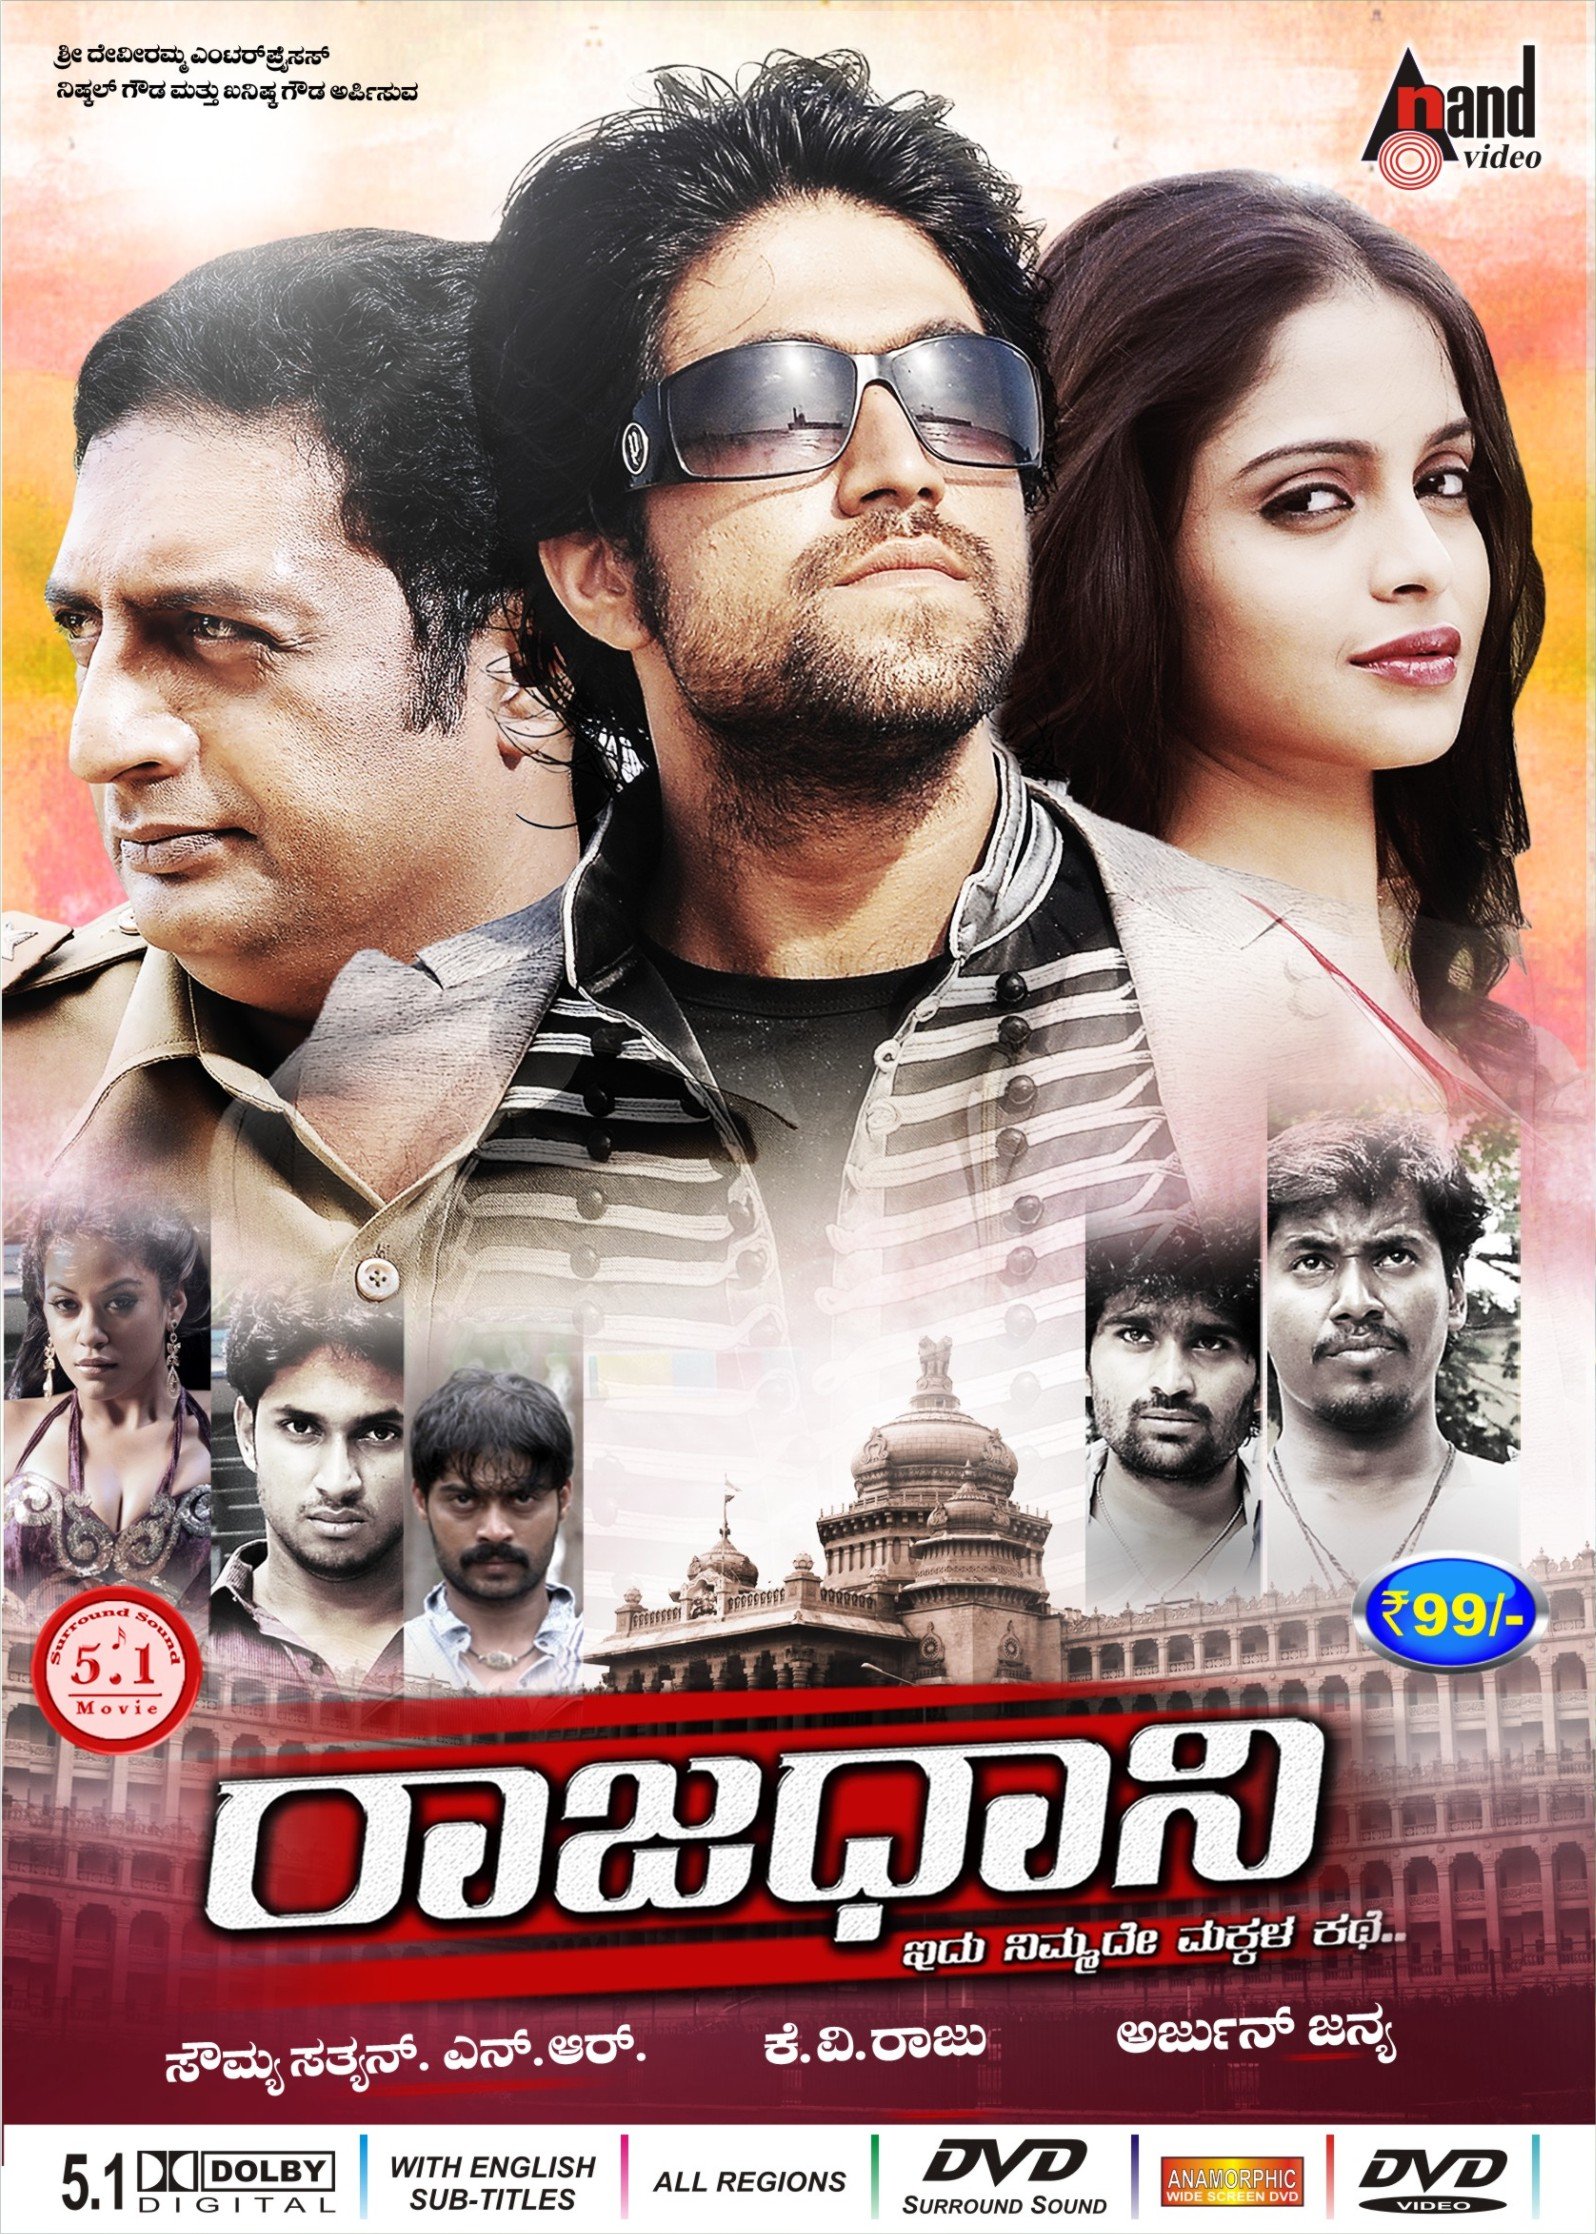 rajadhani-movie-purchase-or-watch-online